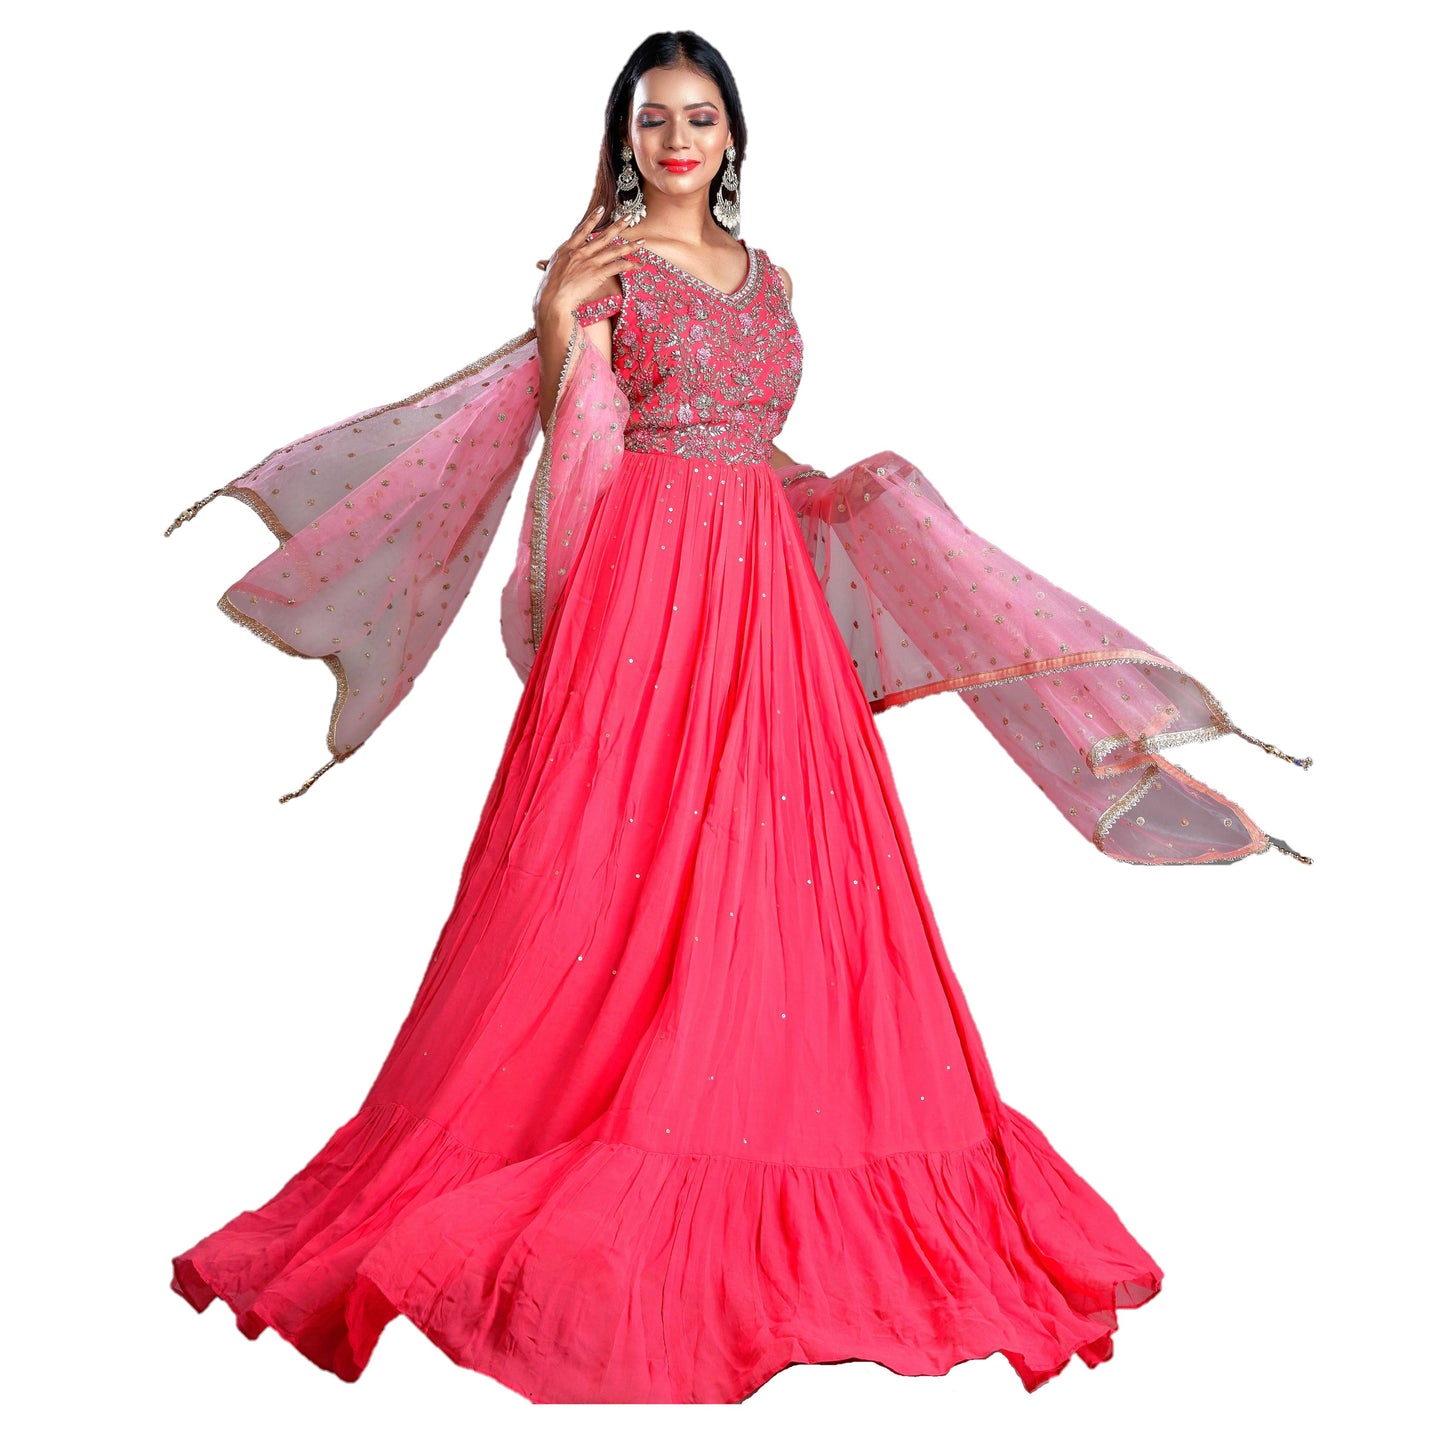 Maharani's Designer Ball (Princess) Gown - Pink/Peach with Zari, Pearl & Sequins Work